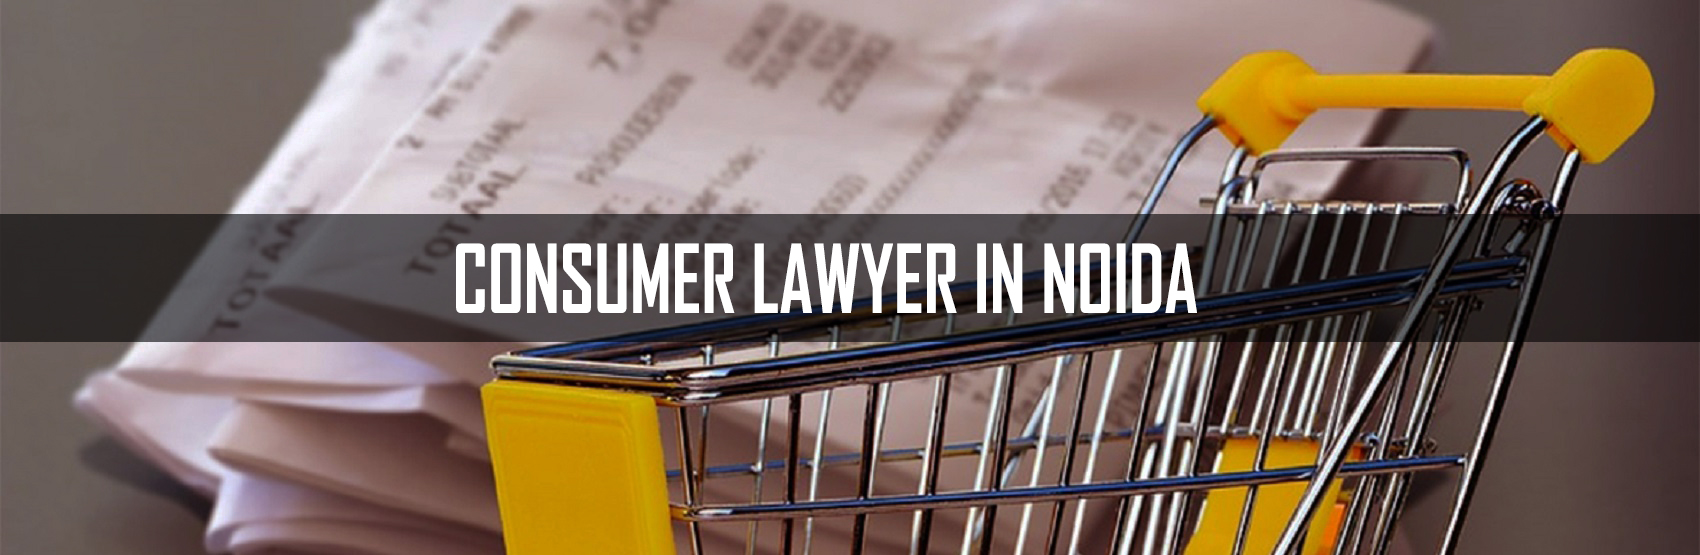 Consumer Lawyer in Noida, Greater Noida, Ghaziabad, Meerut & Hapur